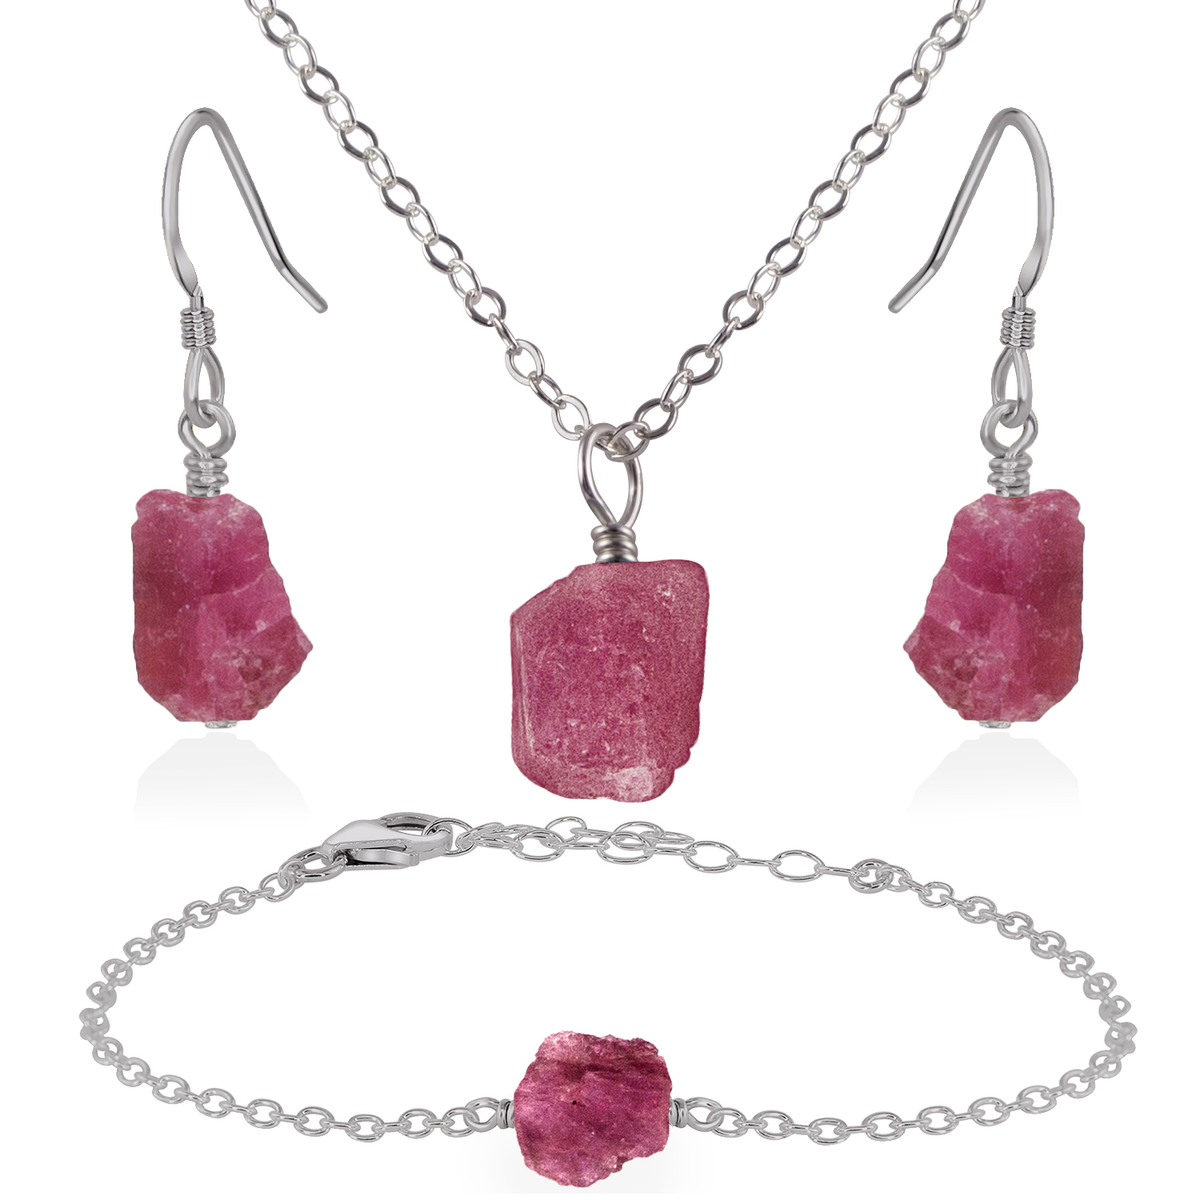 Raw Pink Tourmaline Crystal Jewellery Set - Raw Pink Tourmaline Crystal Jewellery Set - Stainless Steel / Cable / Necklace & Earrings & Bracelet - Luna Tide Handmade Crystal Jewellery